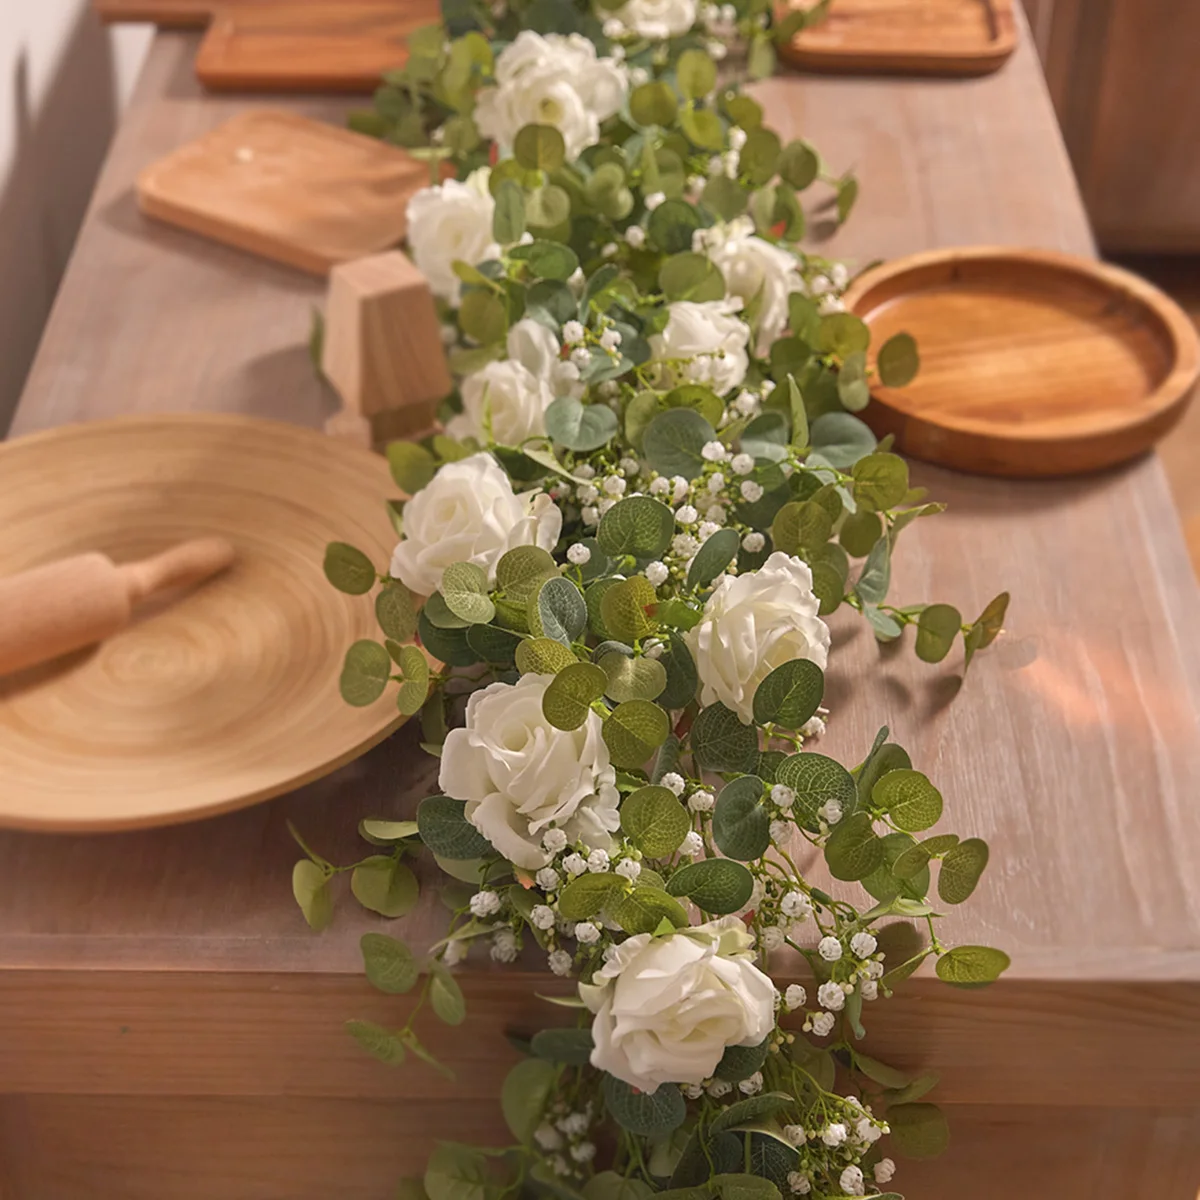 PARTY JOY Artificial Flowers Silk Rose Gypsophila Garland Fake Eucalyptus Vine Hanging Plants for Wedding Home Party Craft Decor images - 6